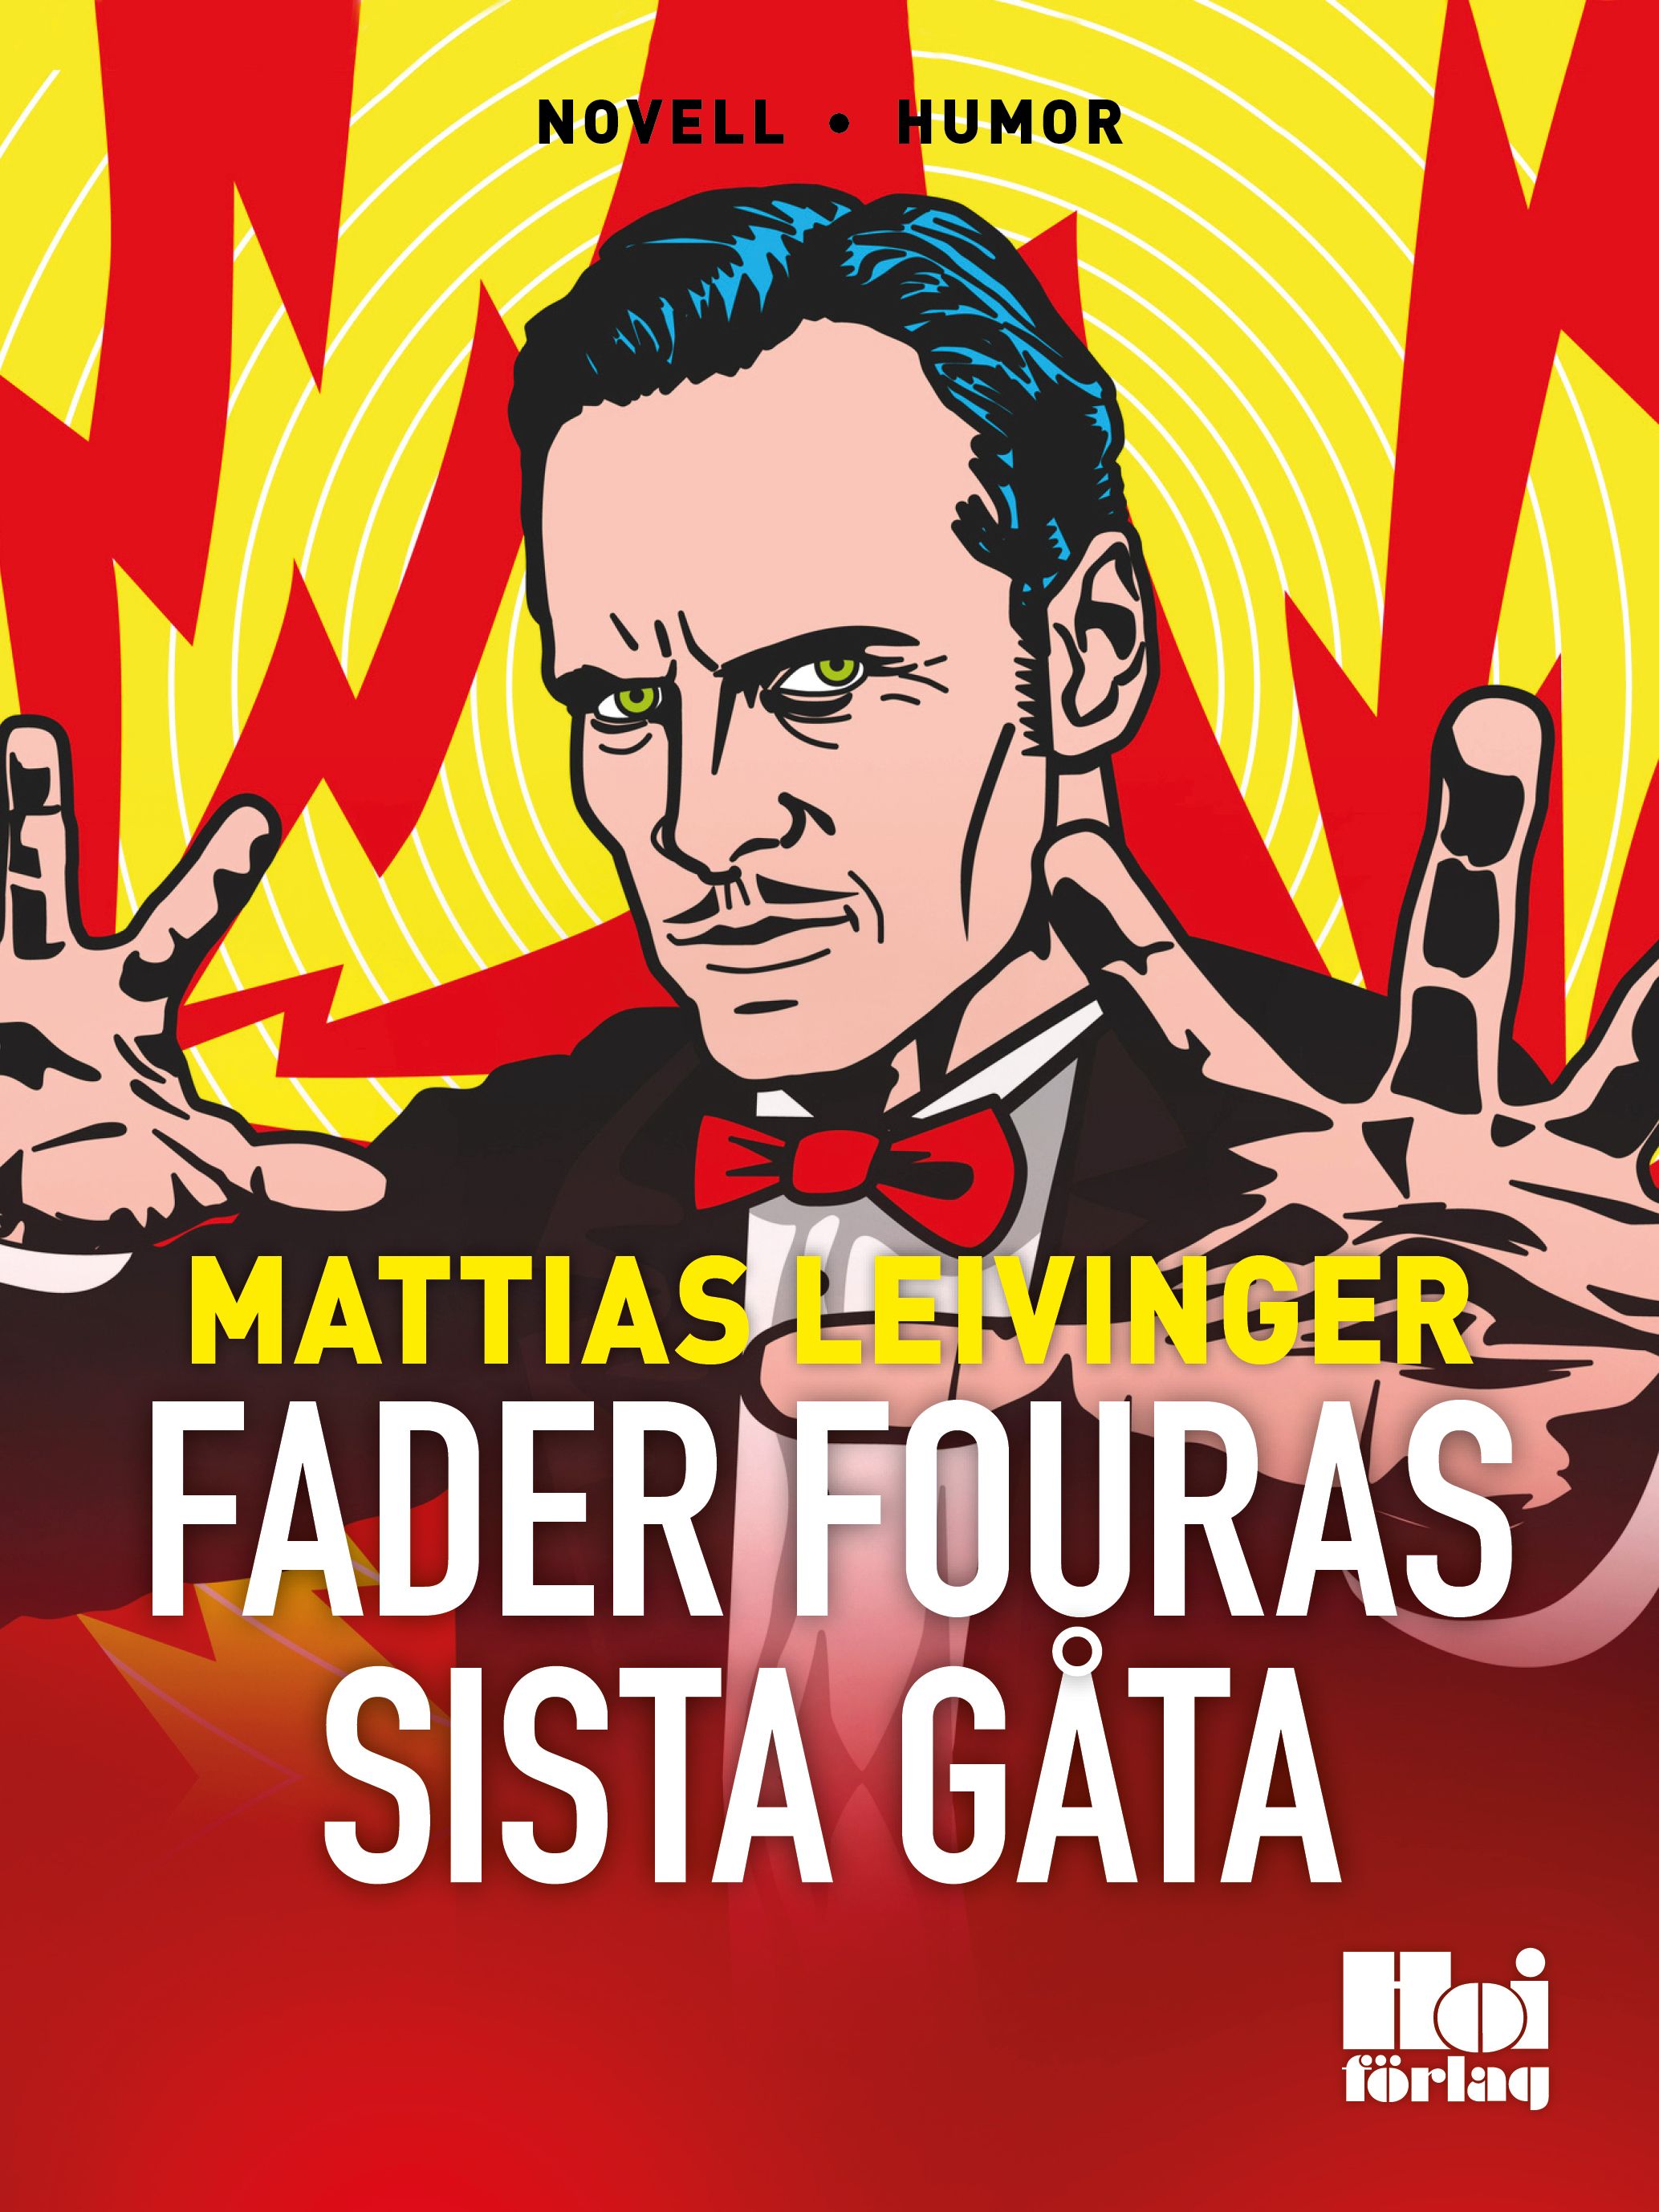 Fader Fouras sista gåta, e-bok av Mattias Leivinger